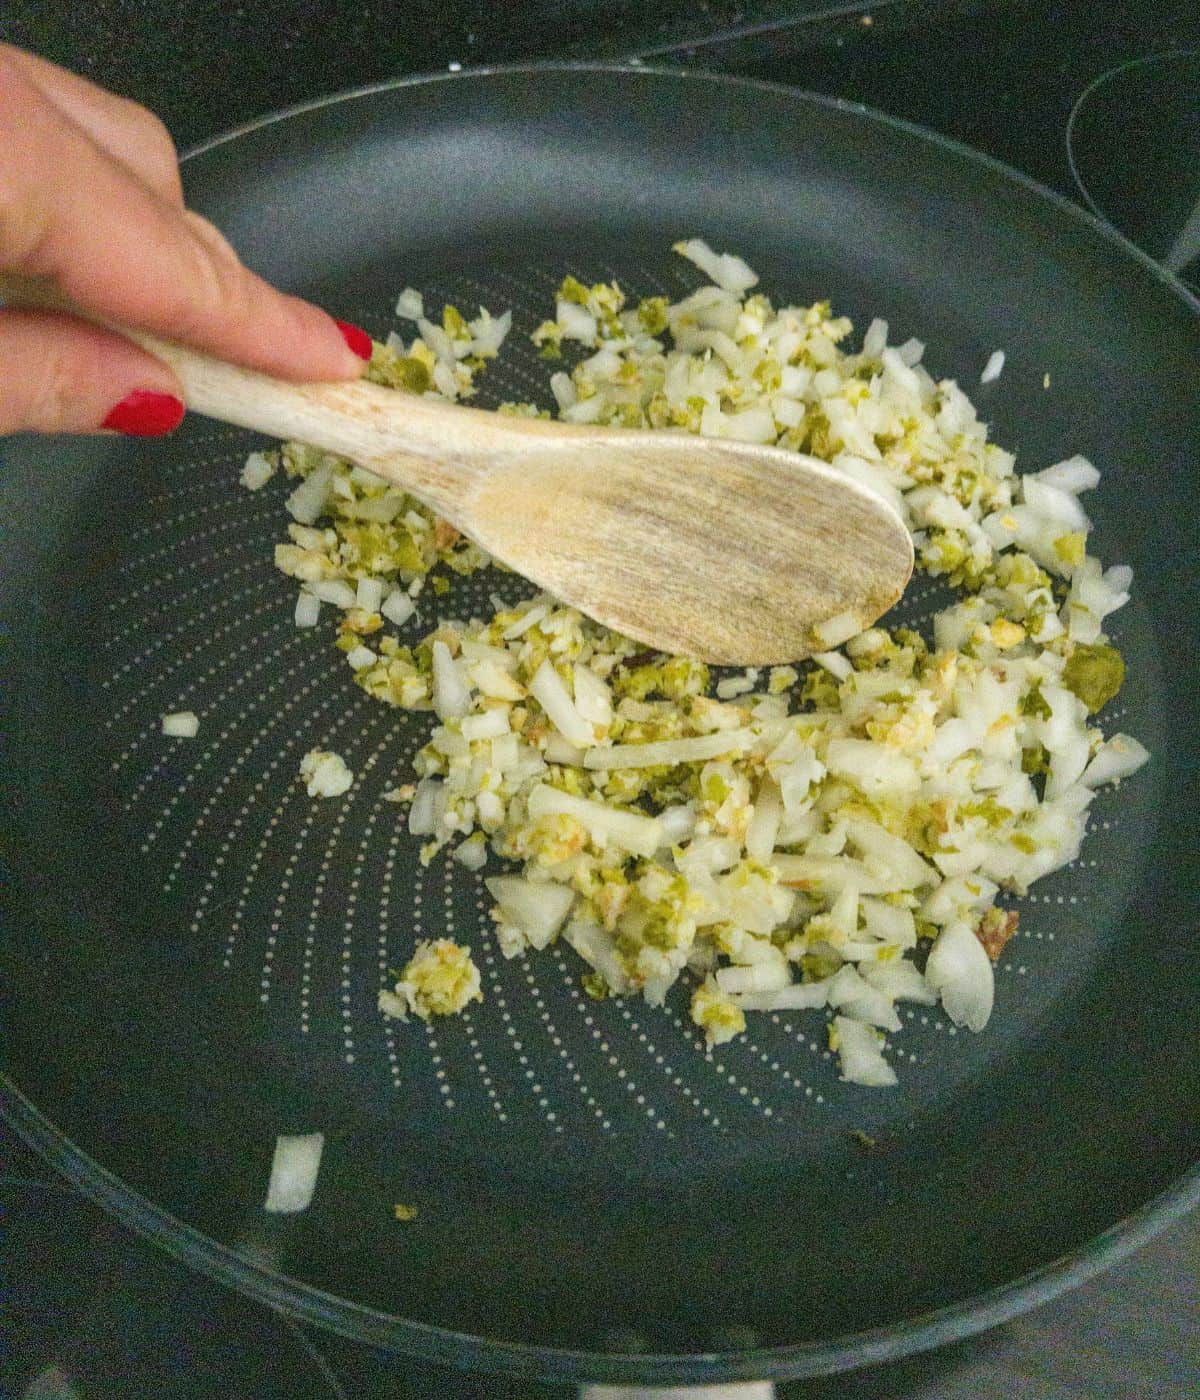 Onions frying in a frying pan.